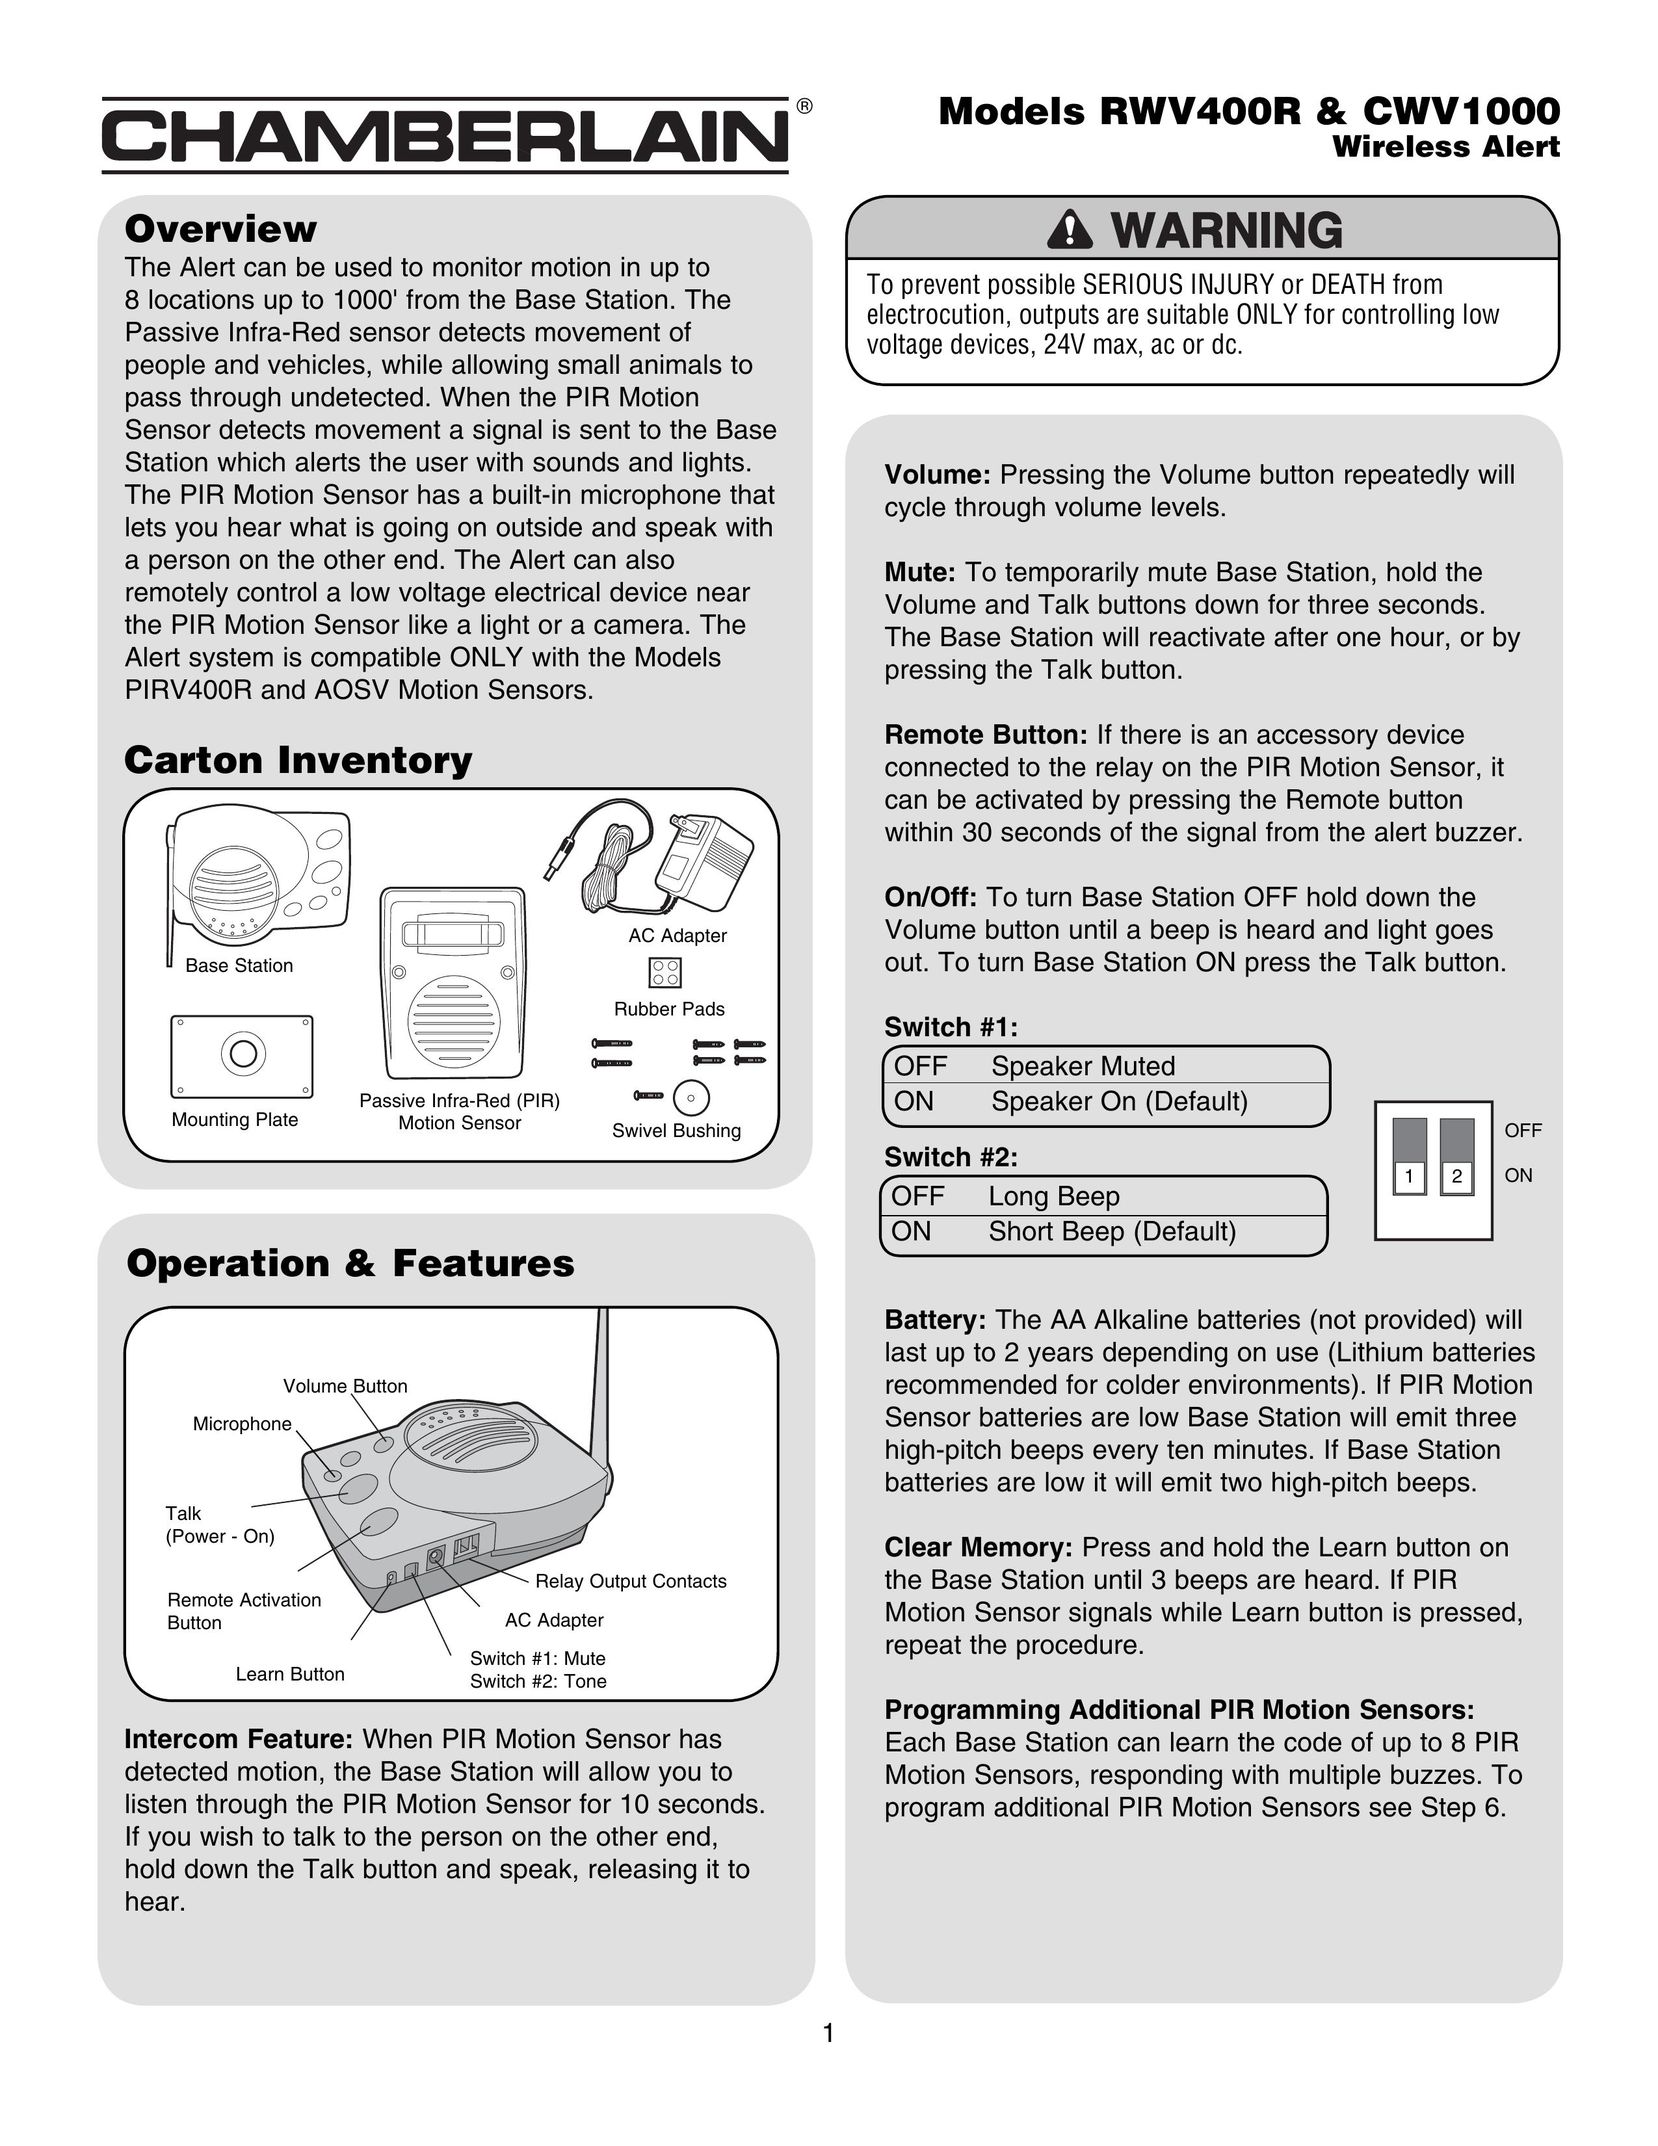 Chamberlain RWV400R Home Security System User Manual